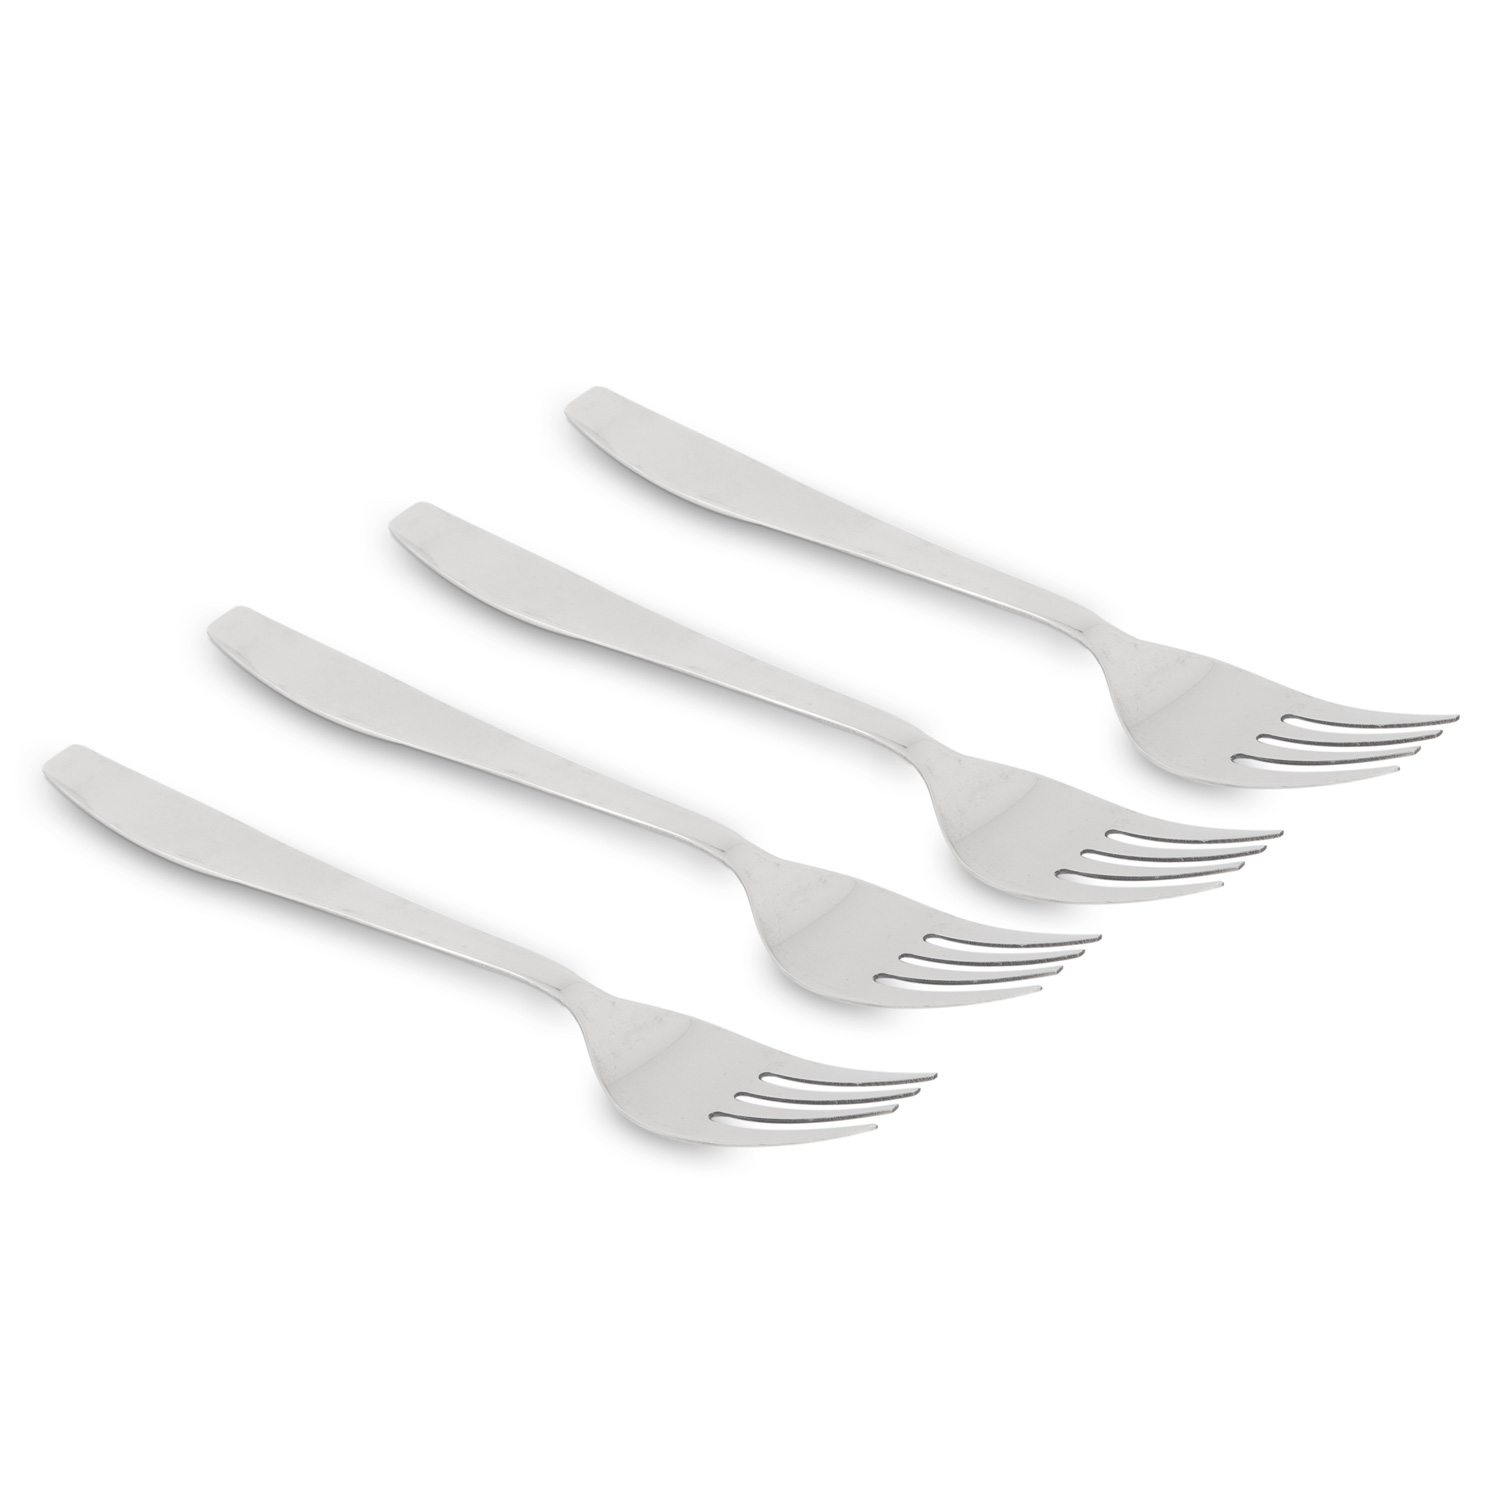 Rk S/S Cutlery Set 16 Pcs, Rk0112, Fusion